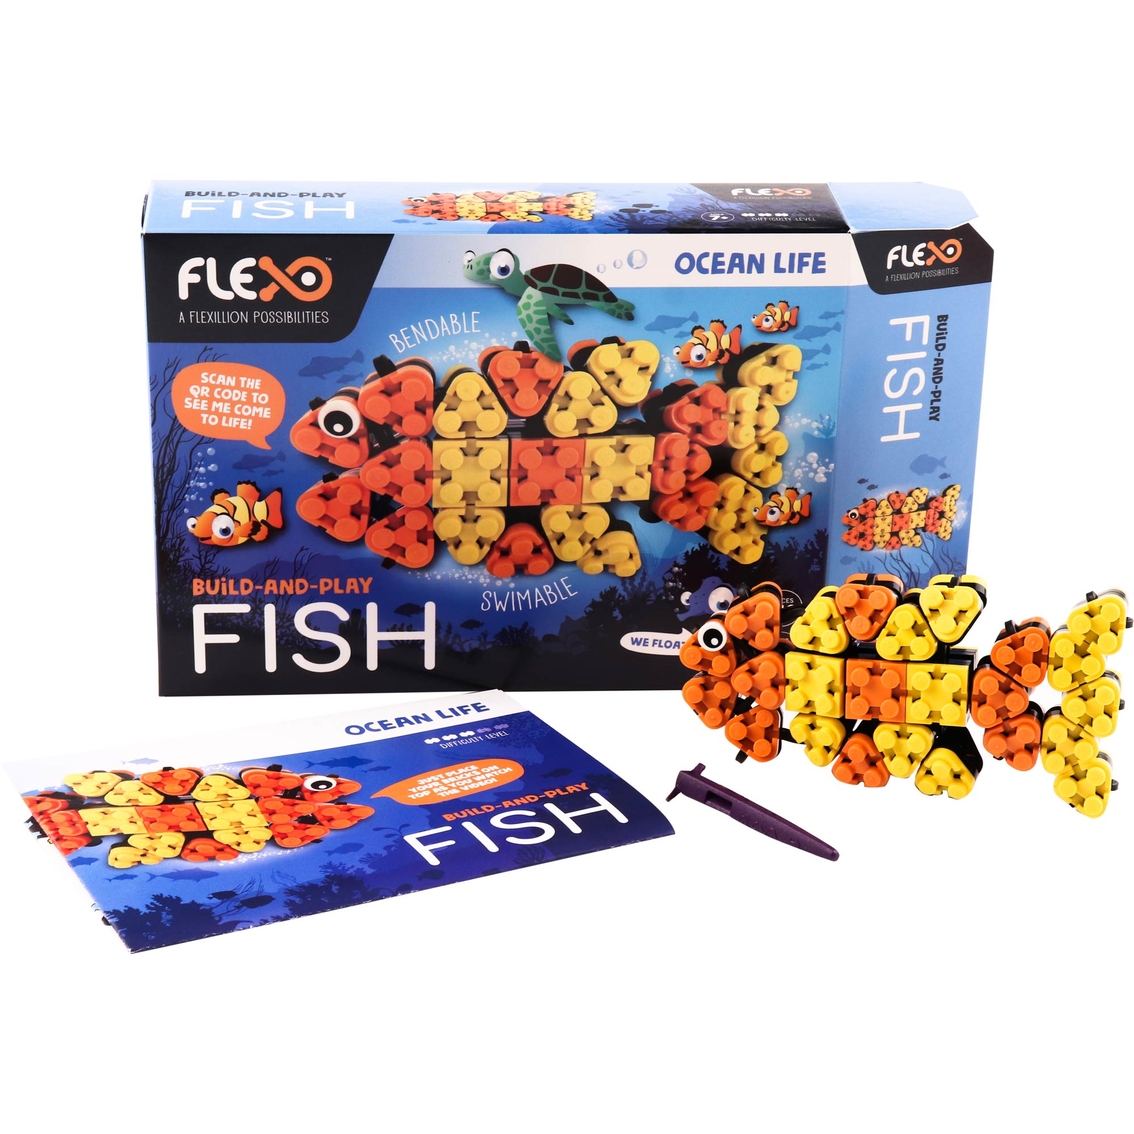 Flexo Building Bricks Ocean Life Range Fish - Image 2 of 3